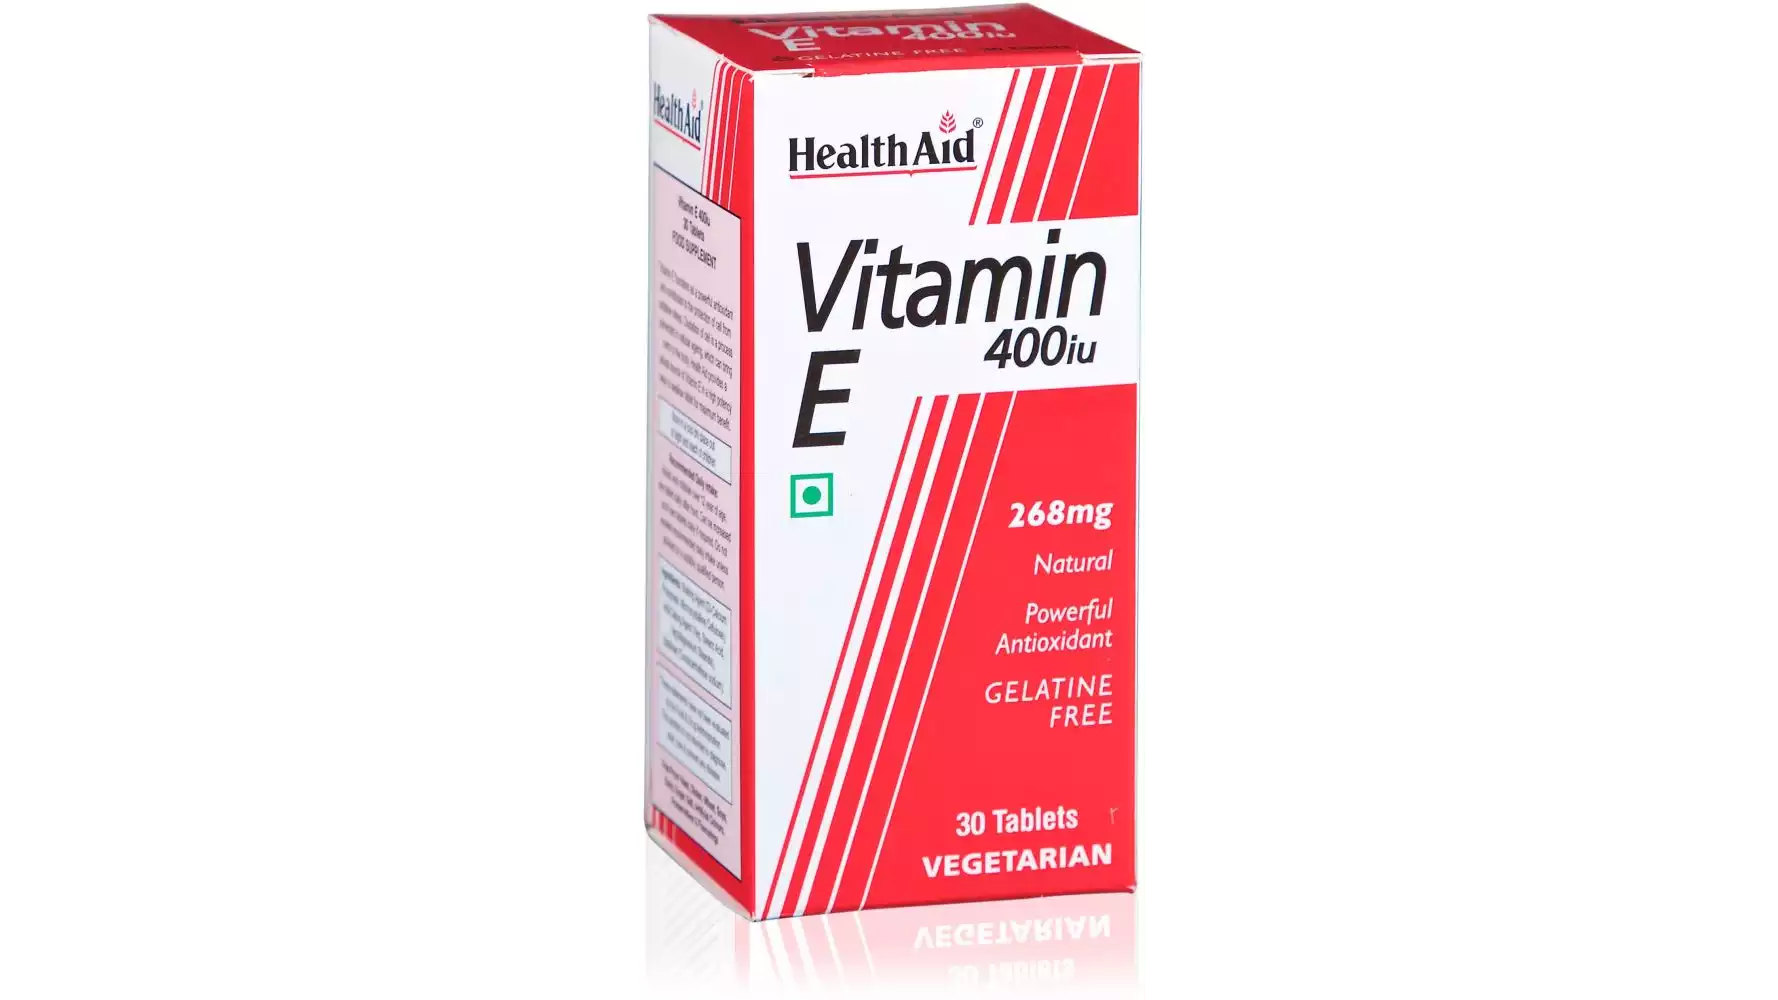 HealthAid Vitamin E 400Iu Tablets (30tab)